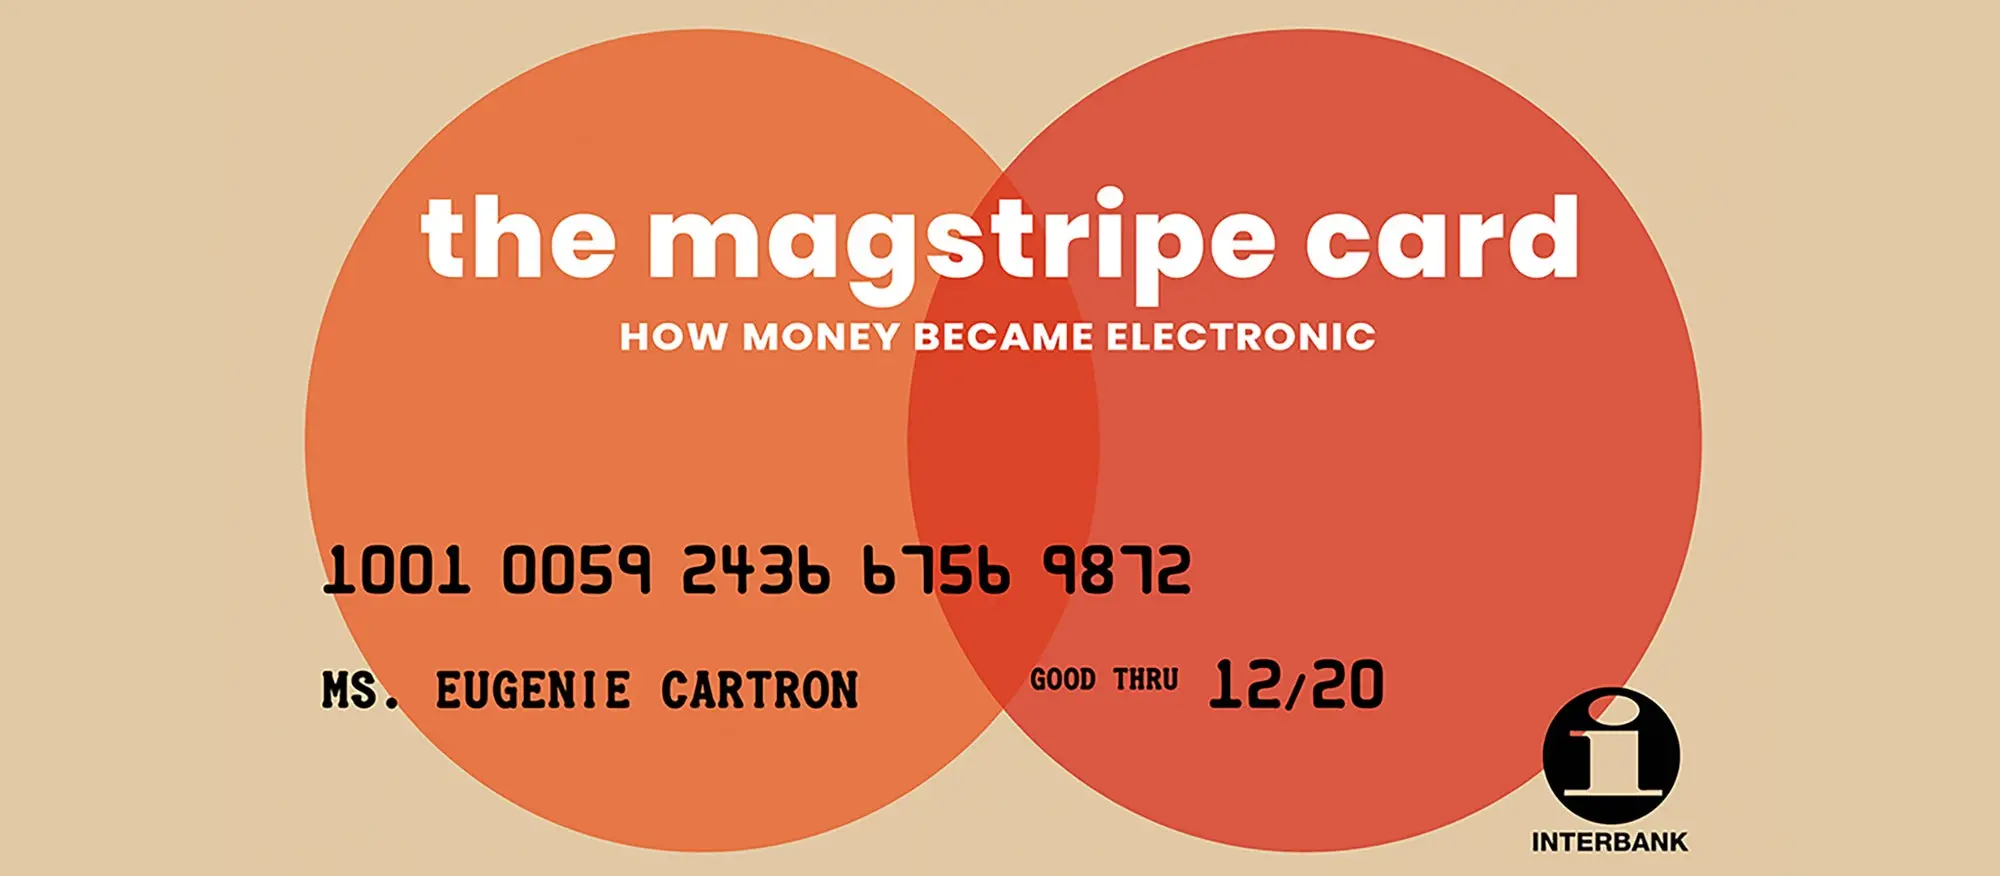 the magstripe card